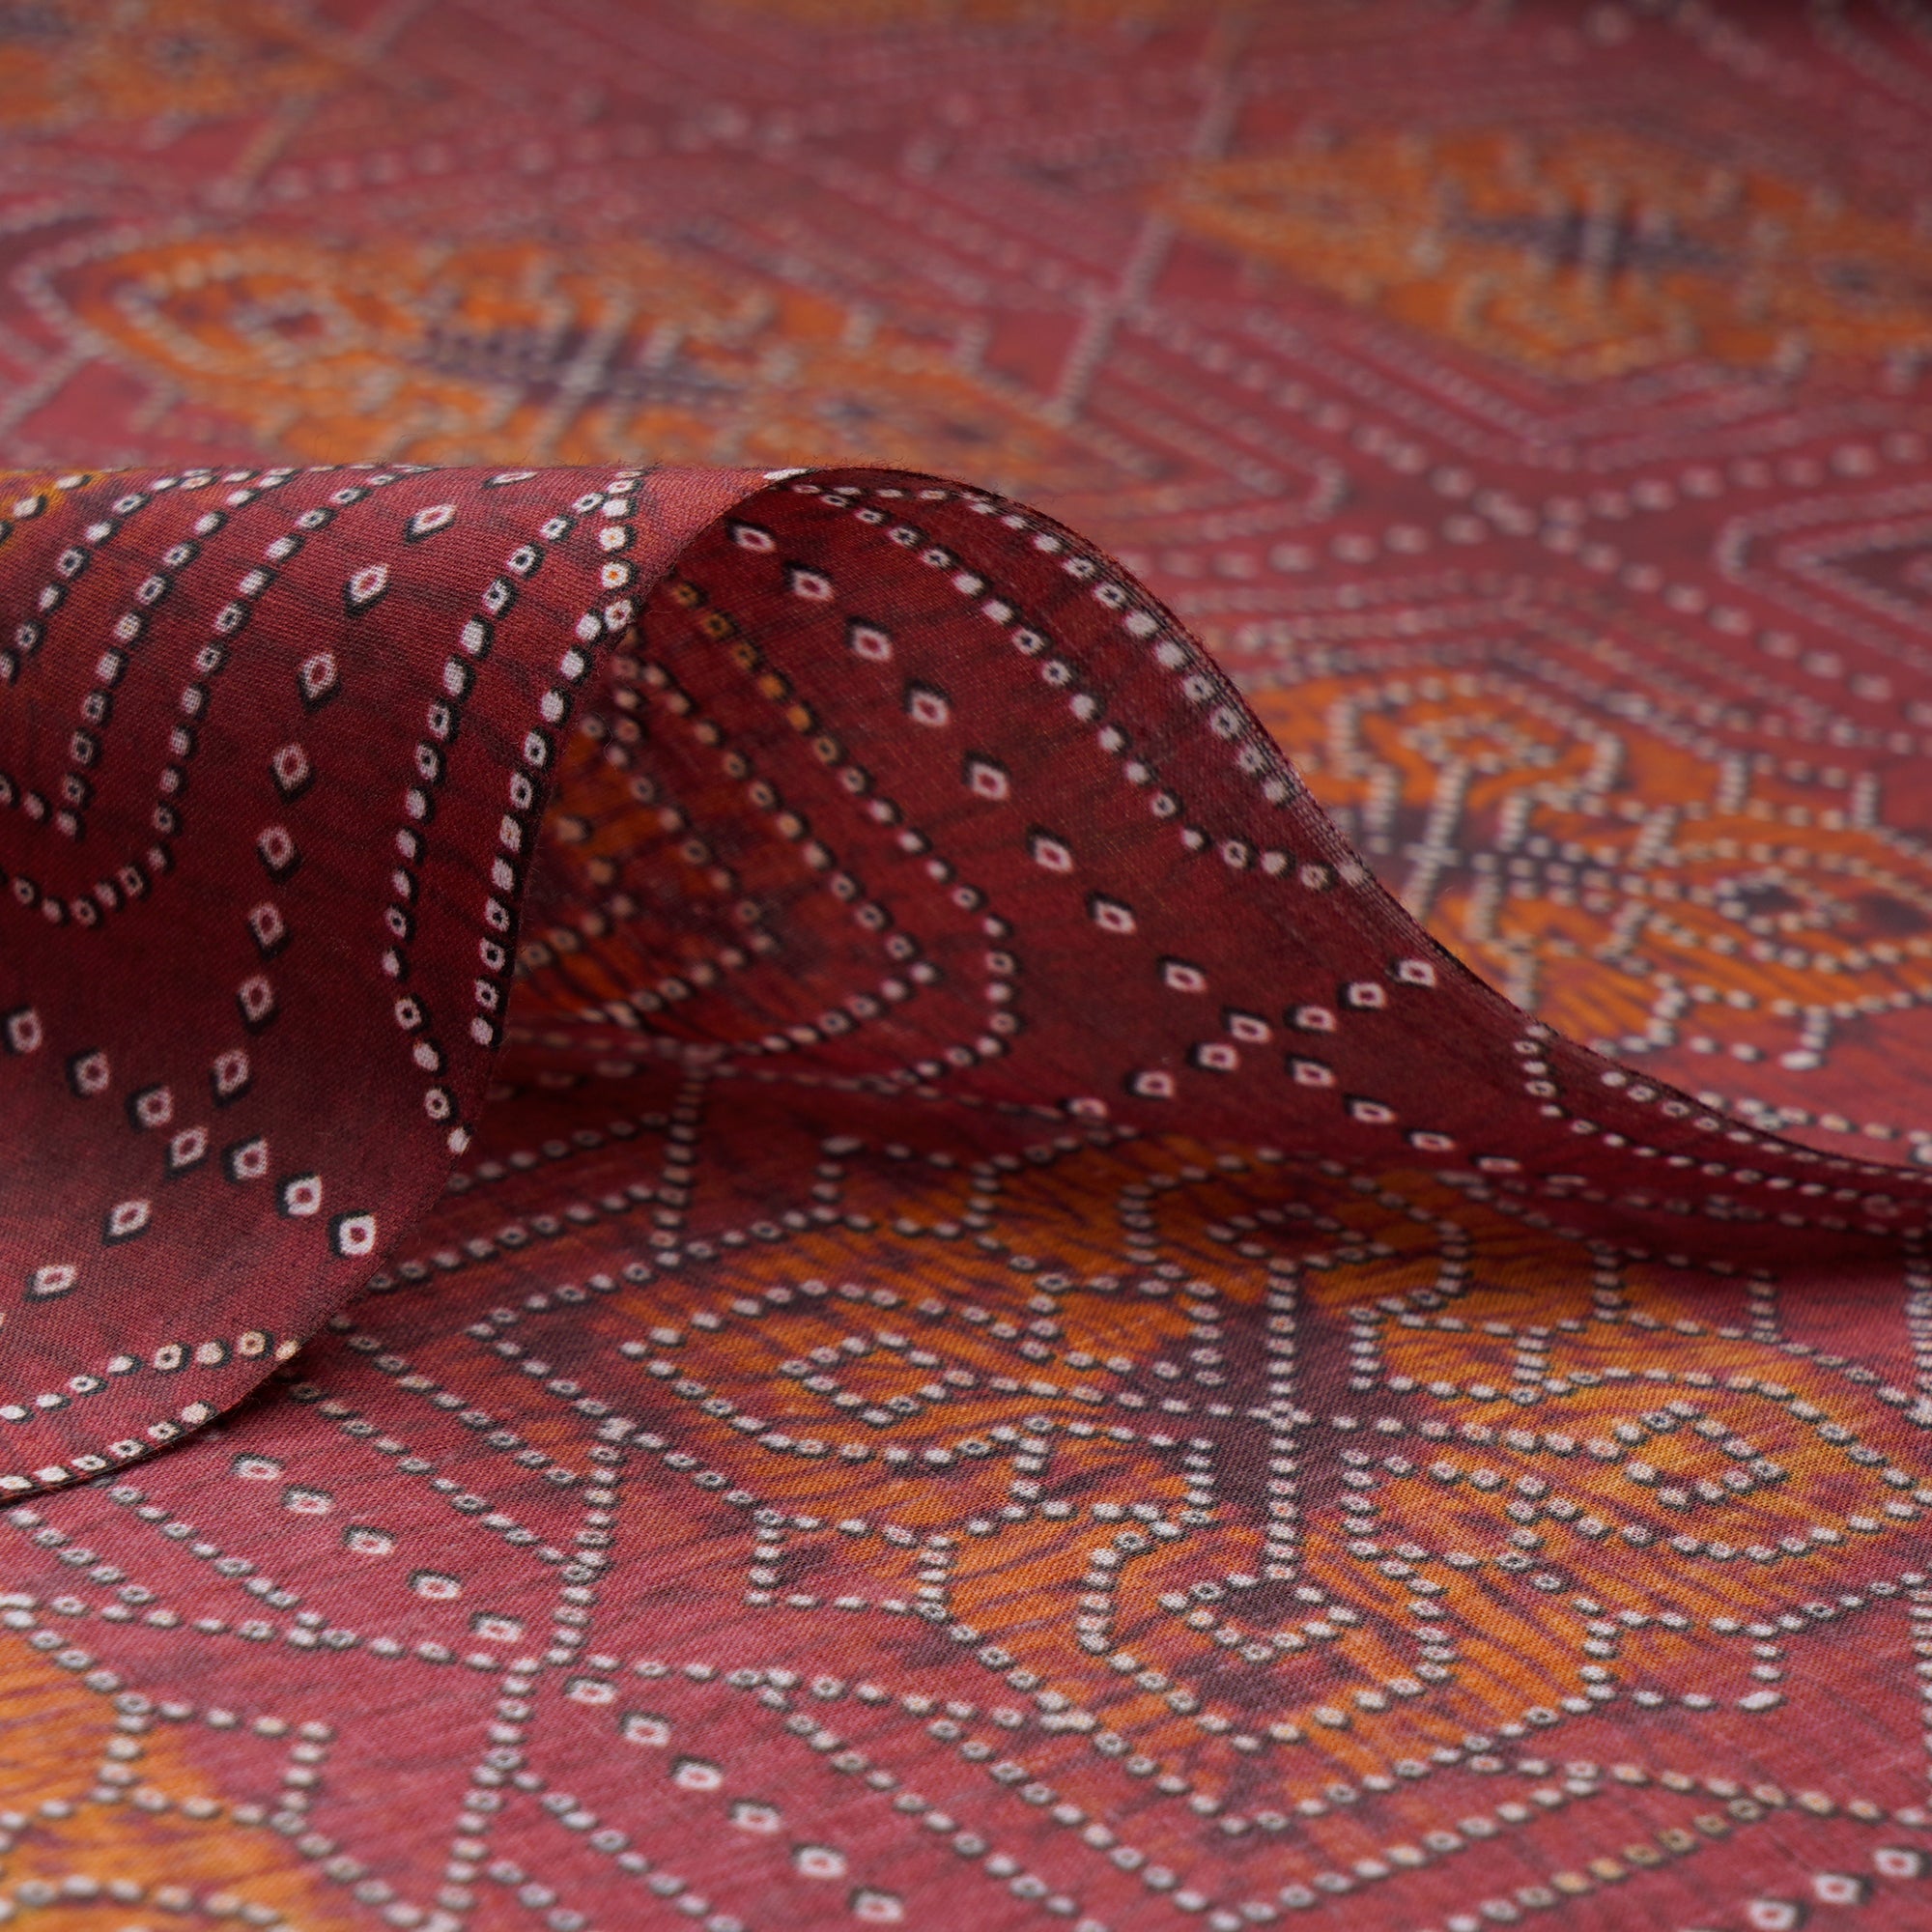 Marsala Bandhani Pattern Digital Print Voile Cotton Fabric